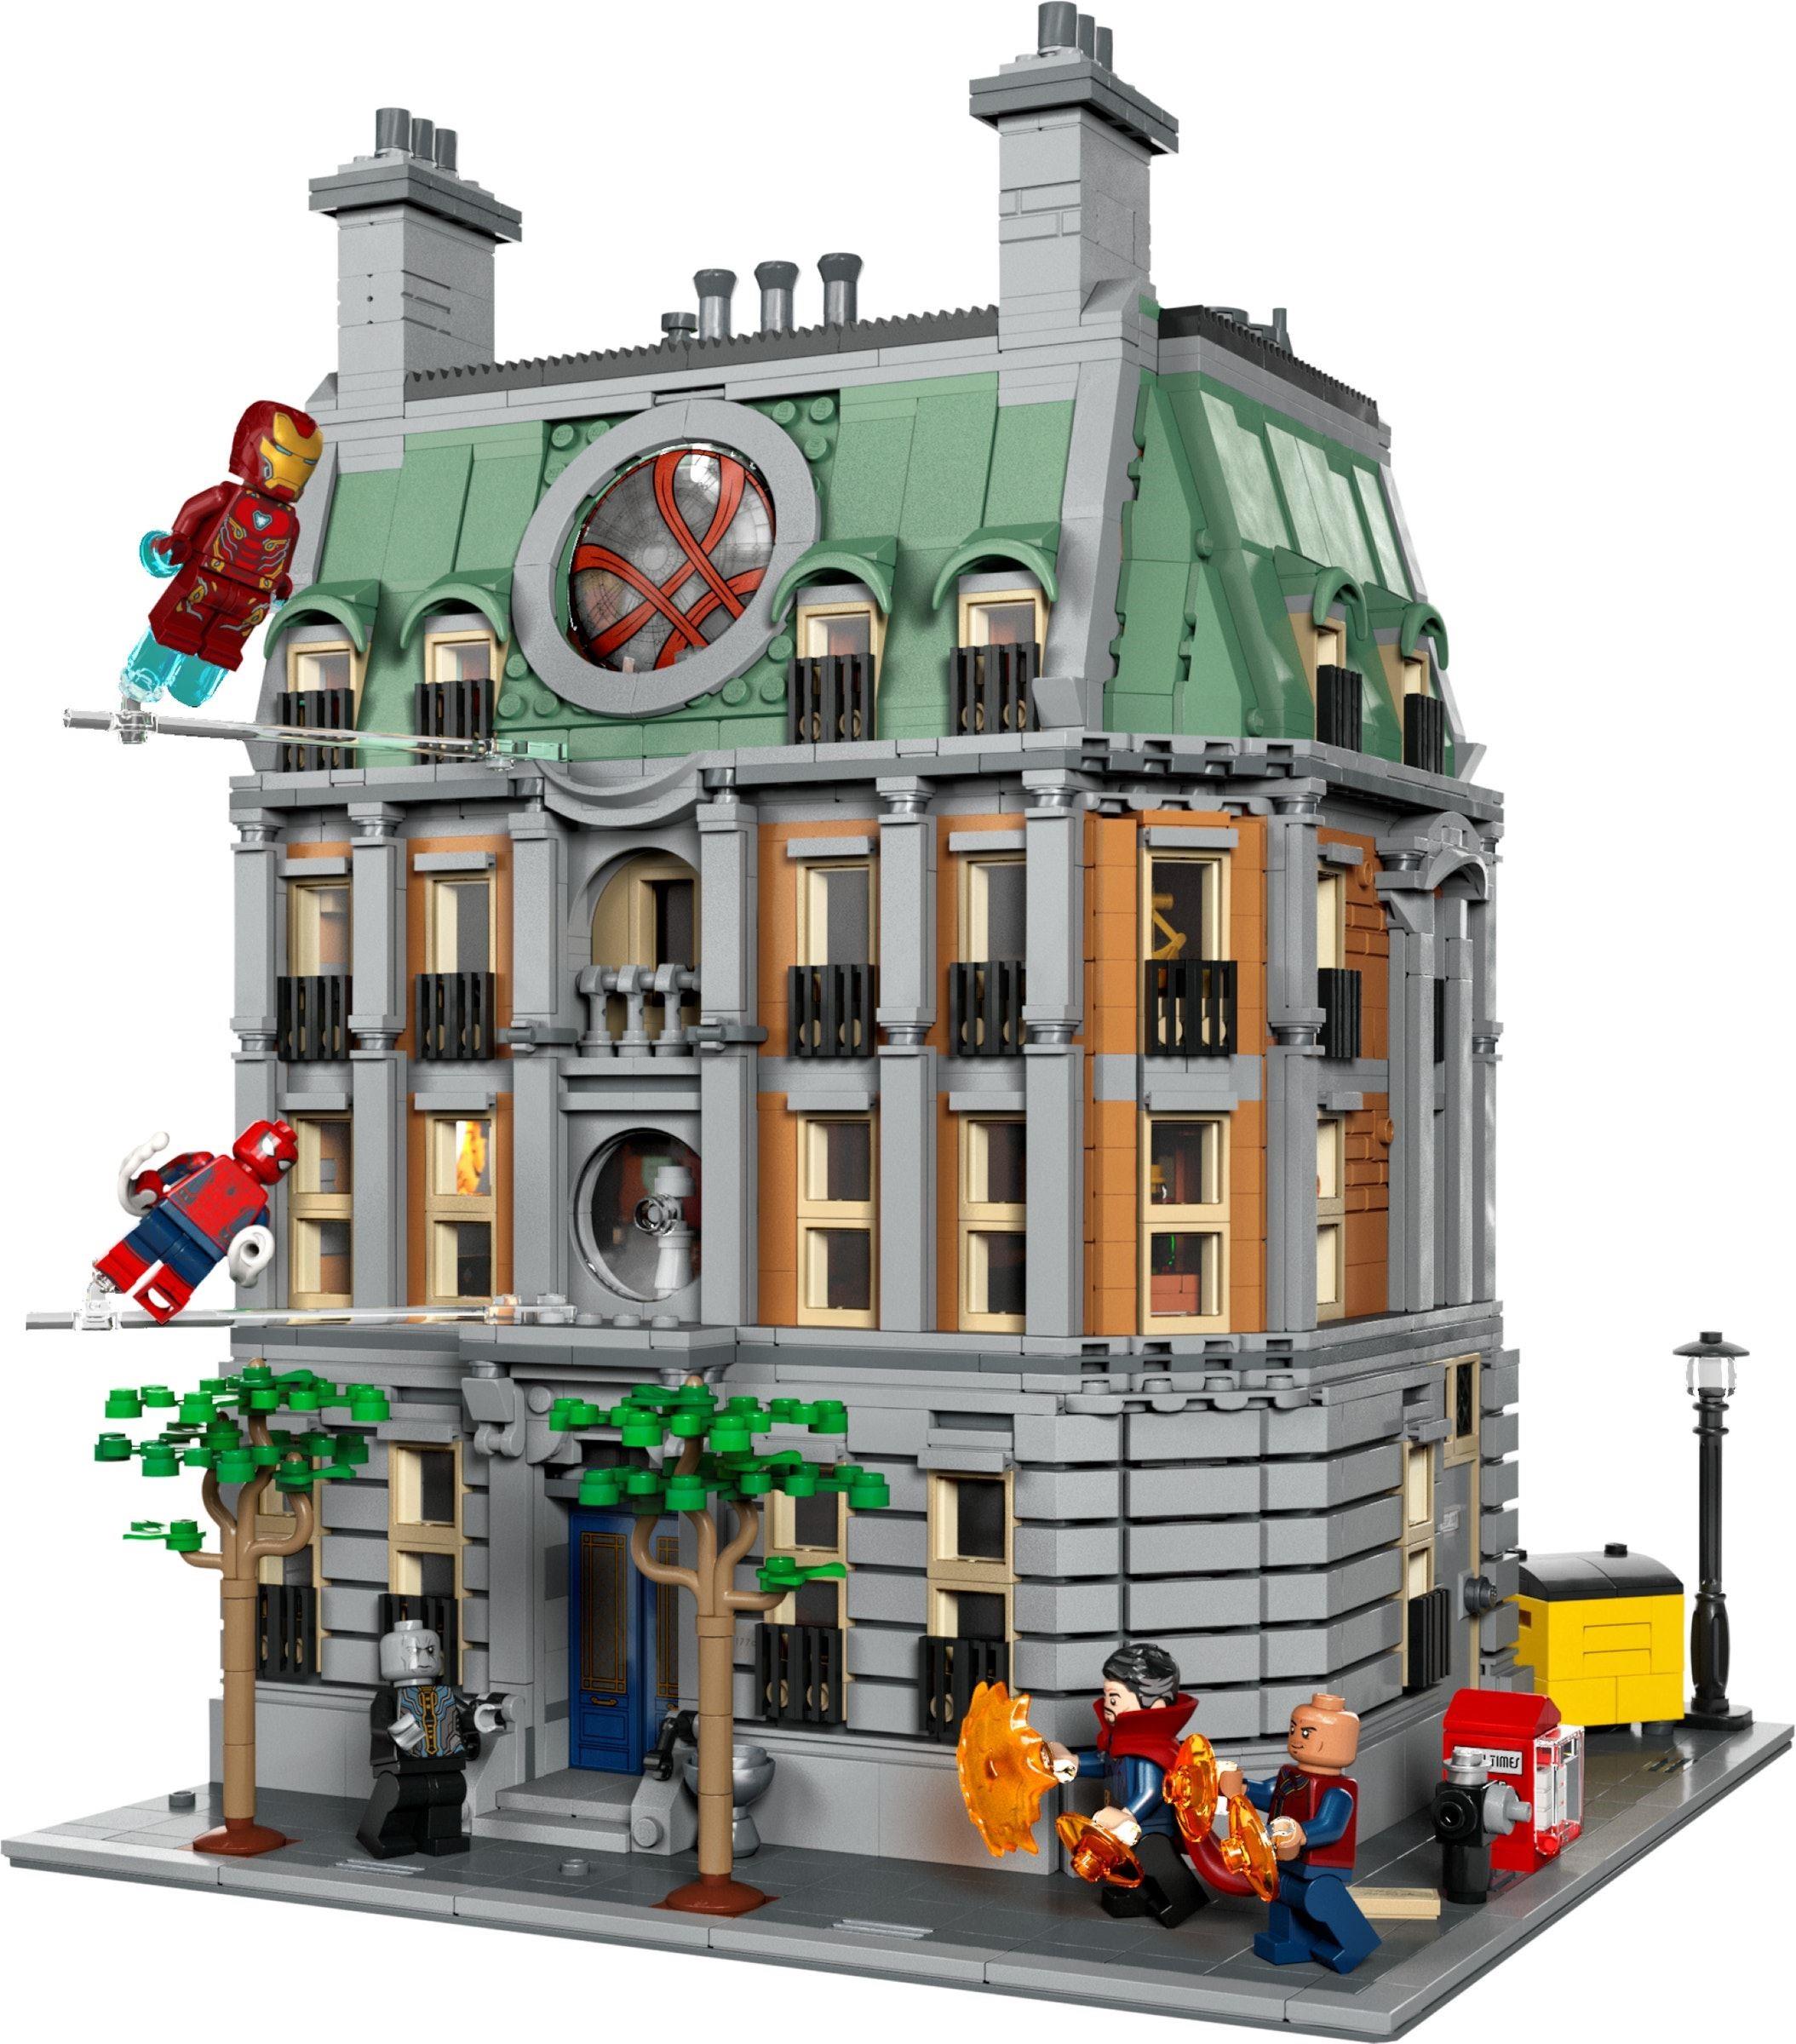 LEGO Sanctum Sanctorum minifigures: A closer look at 9 minifigs